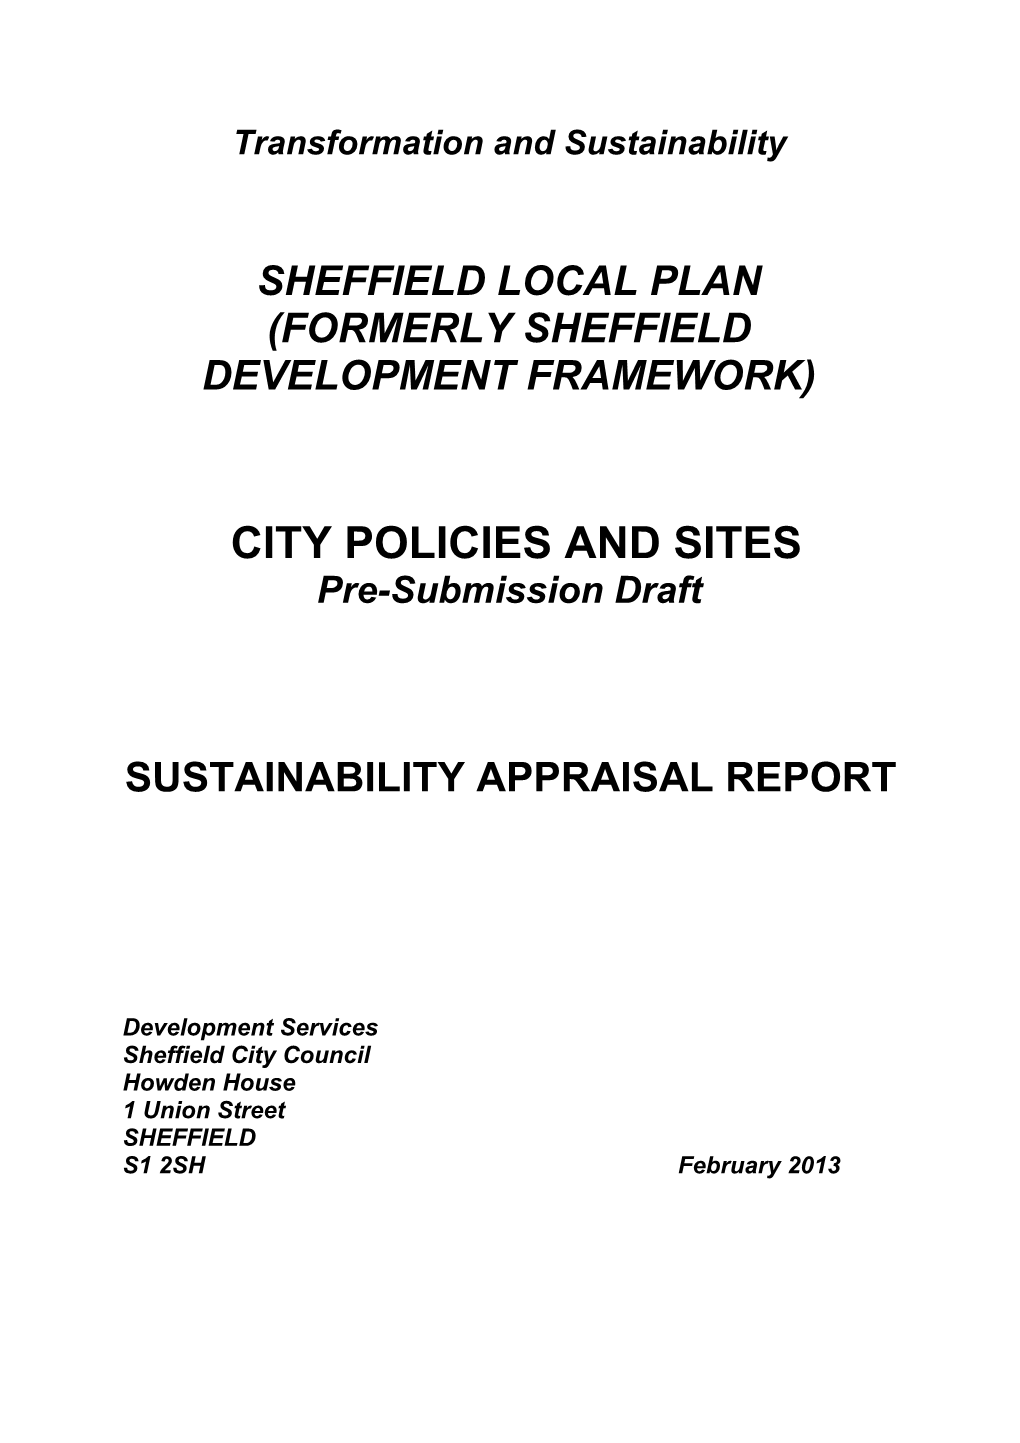 Formerly Sheffield Development Framework